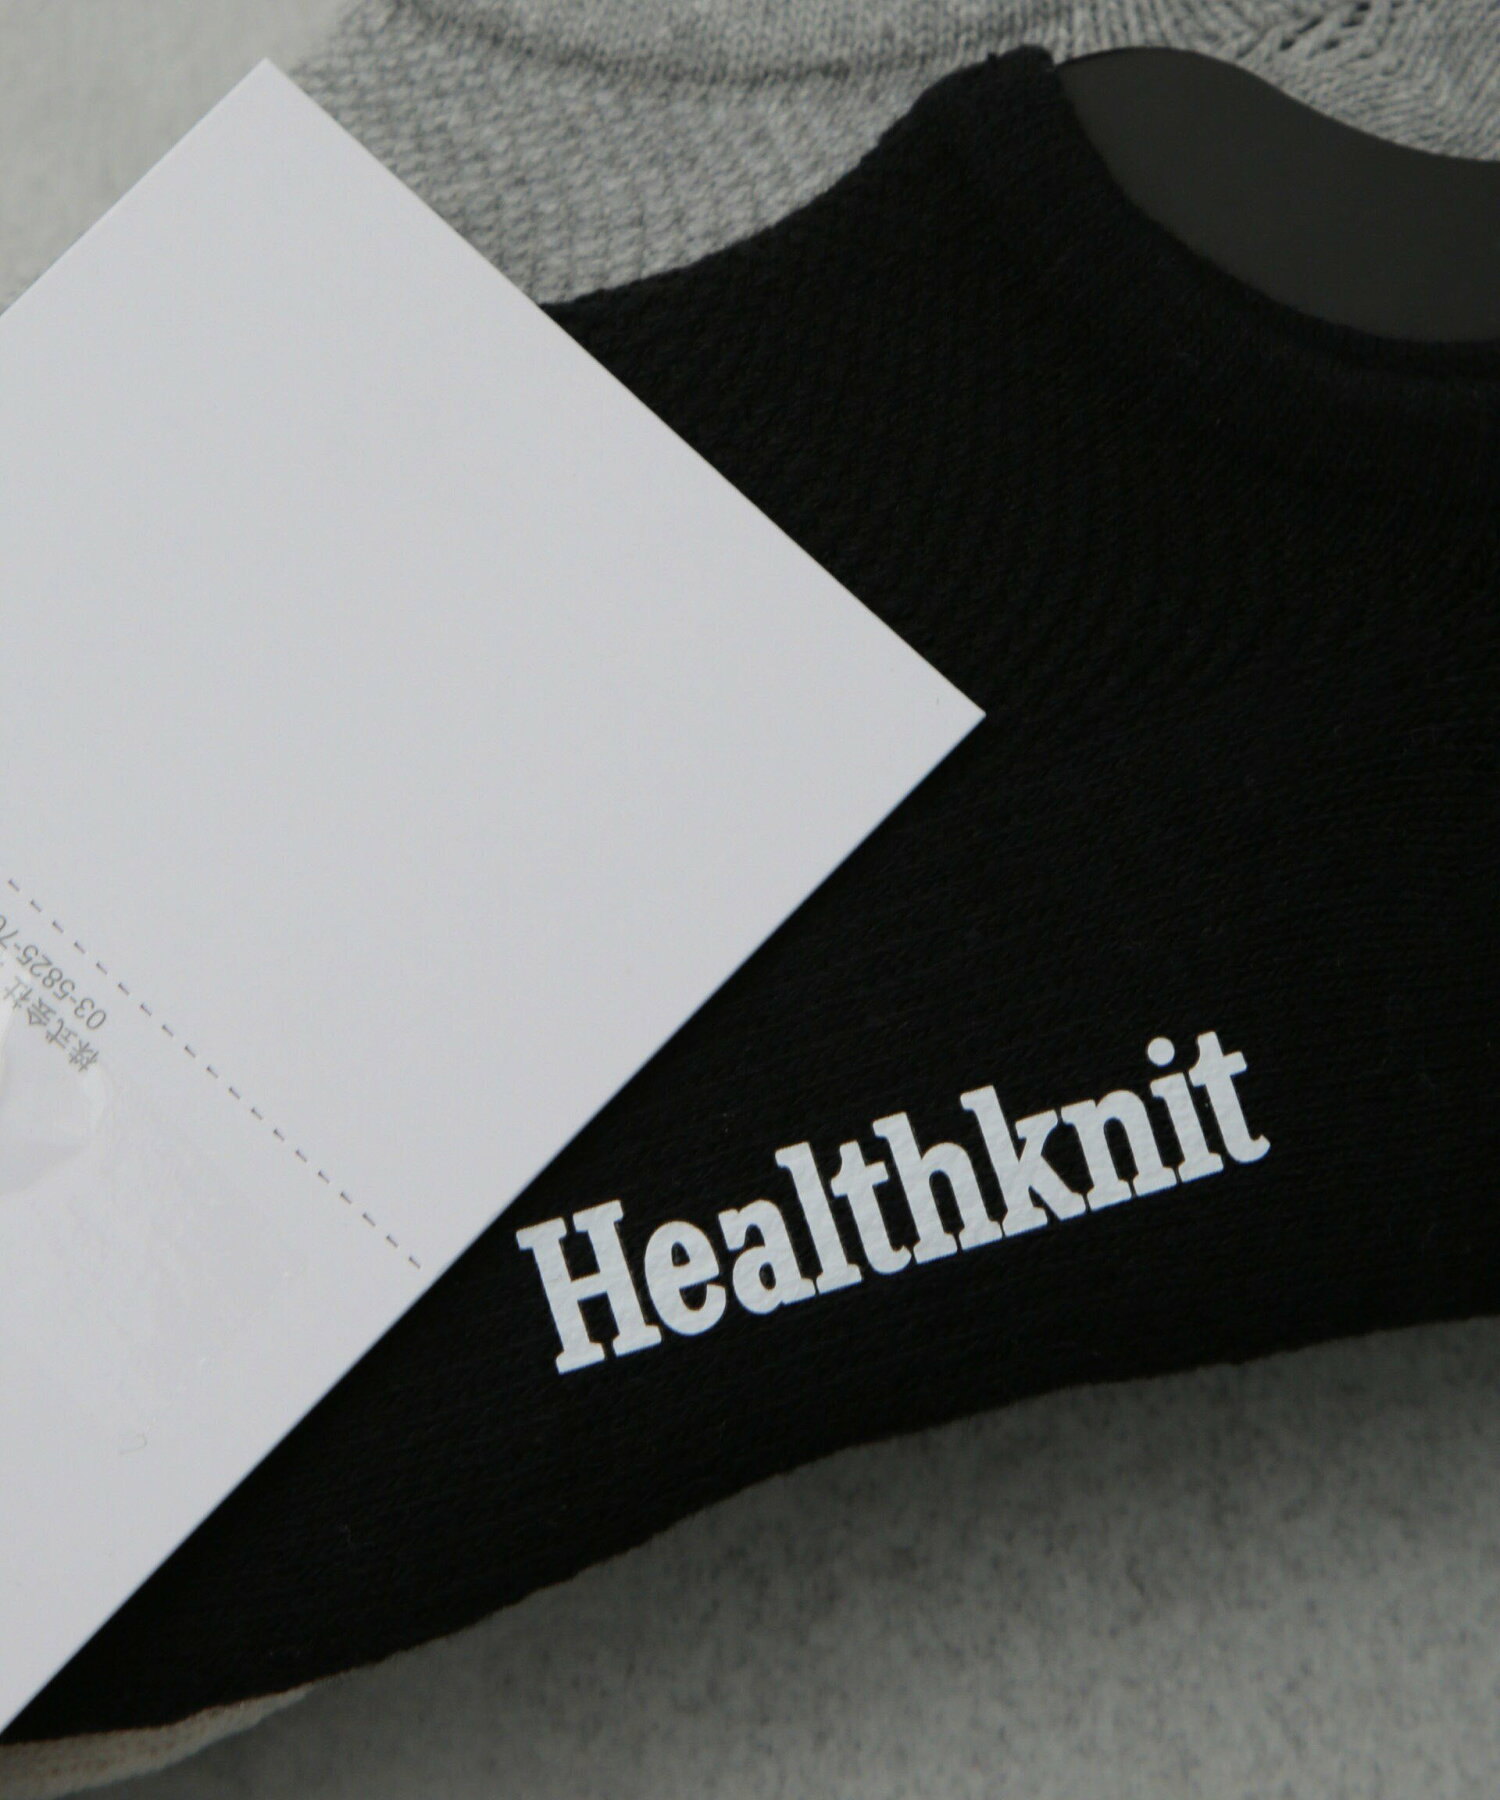 Healthknit/ペナント刺繍ソックス 3足セット/カラーアソート